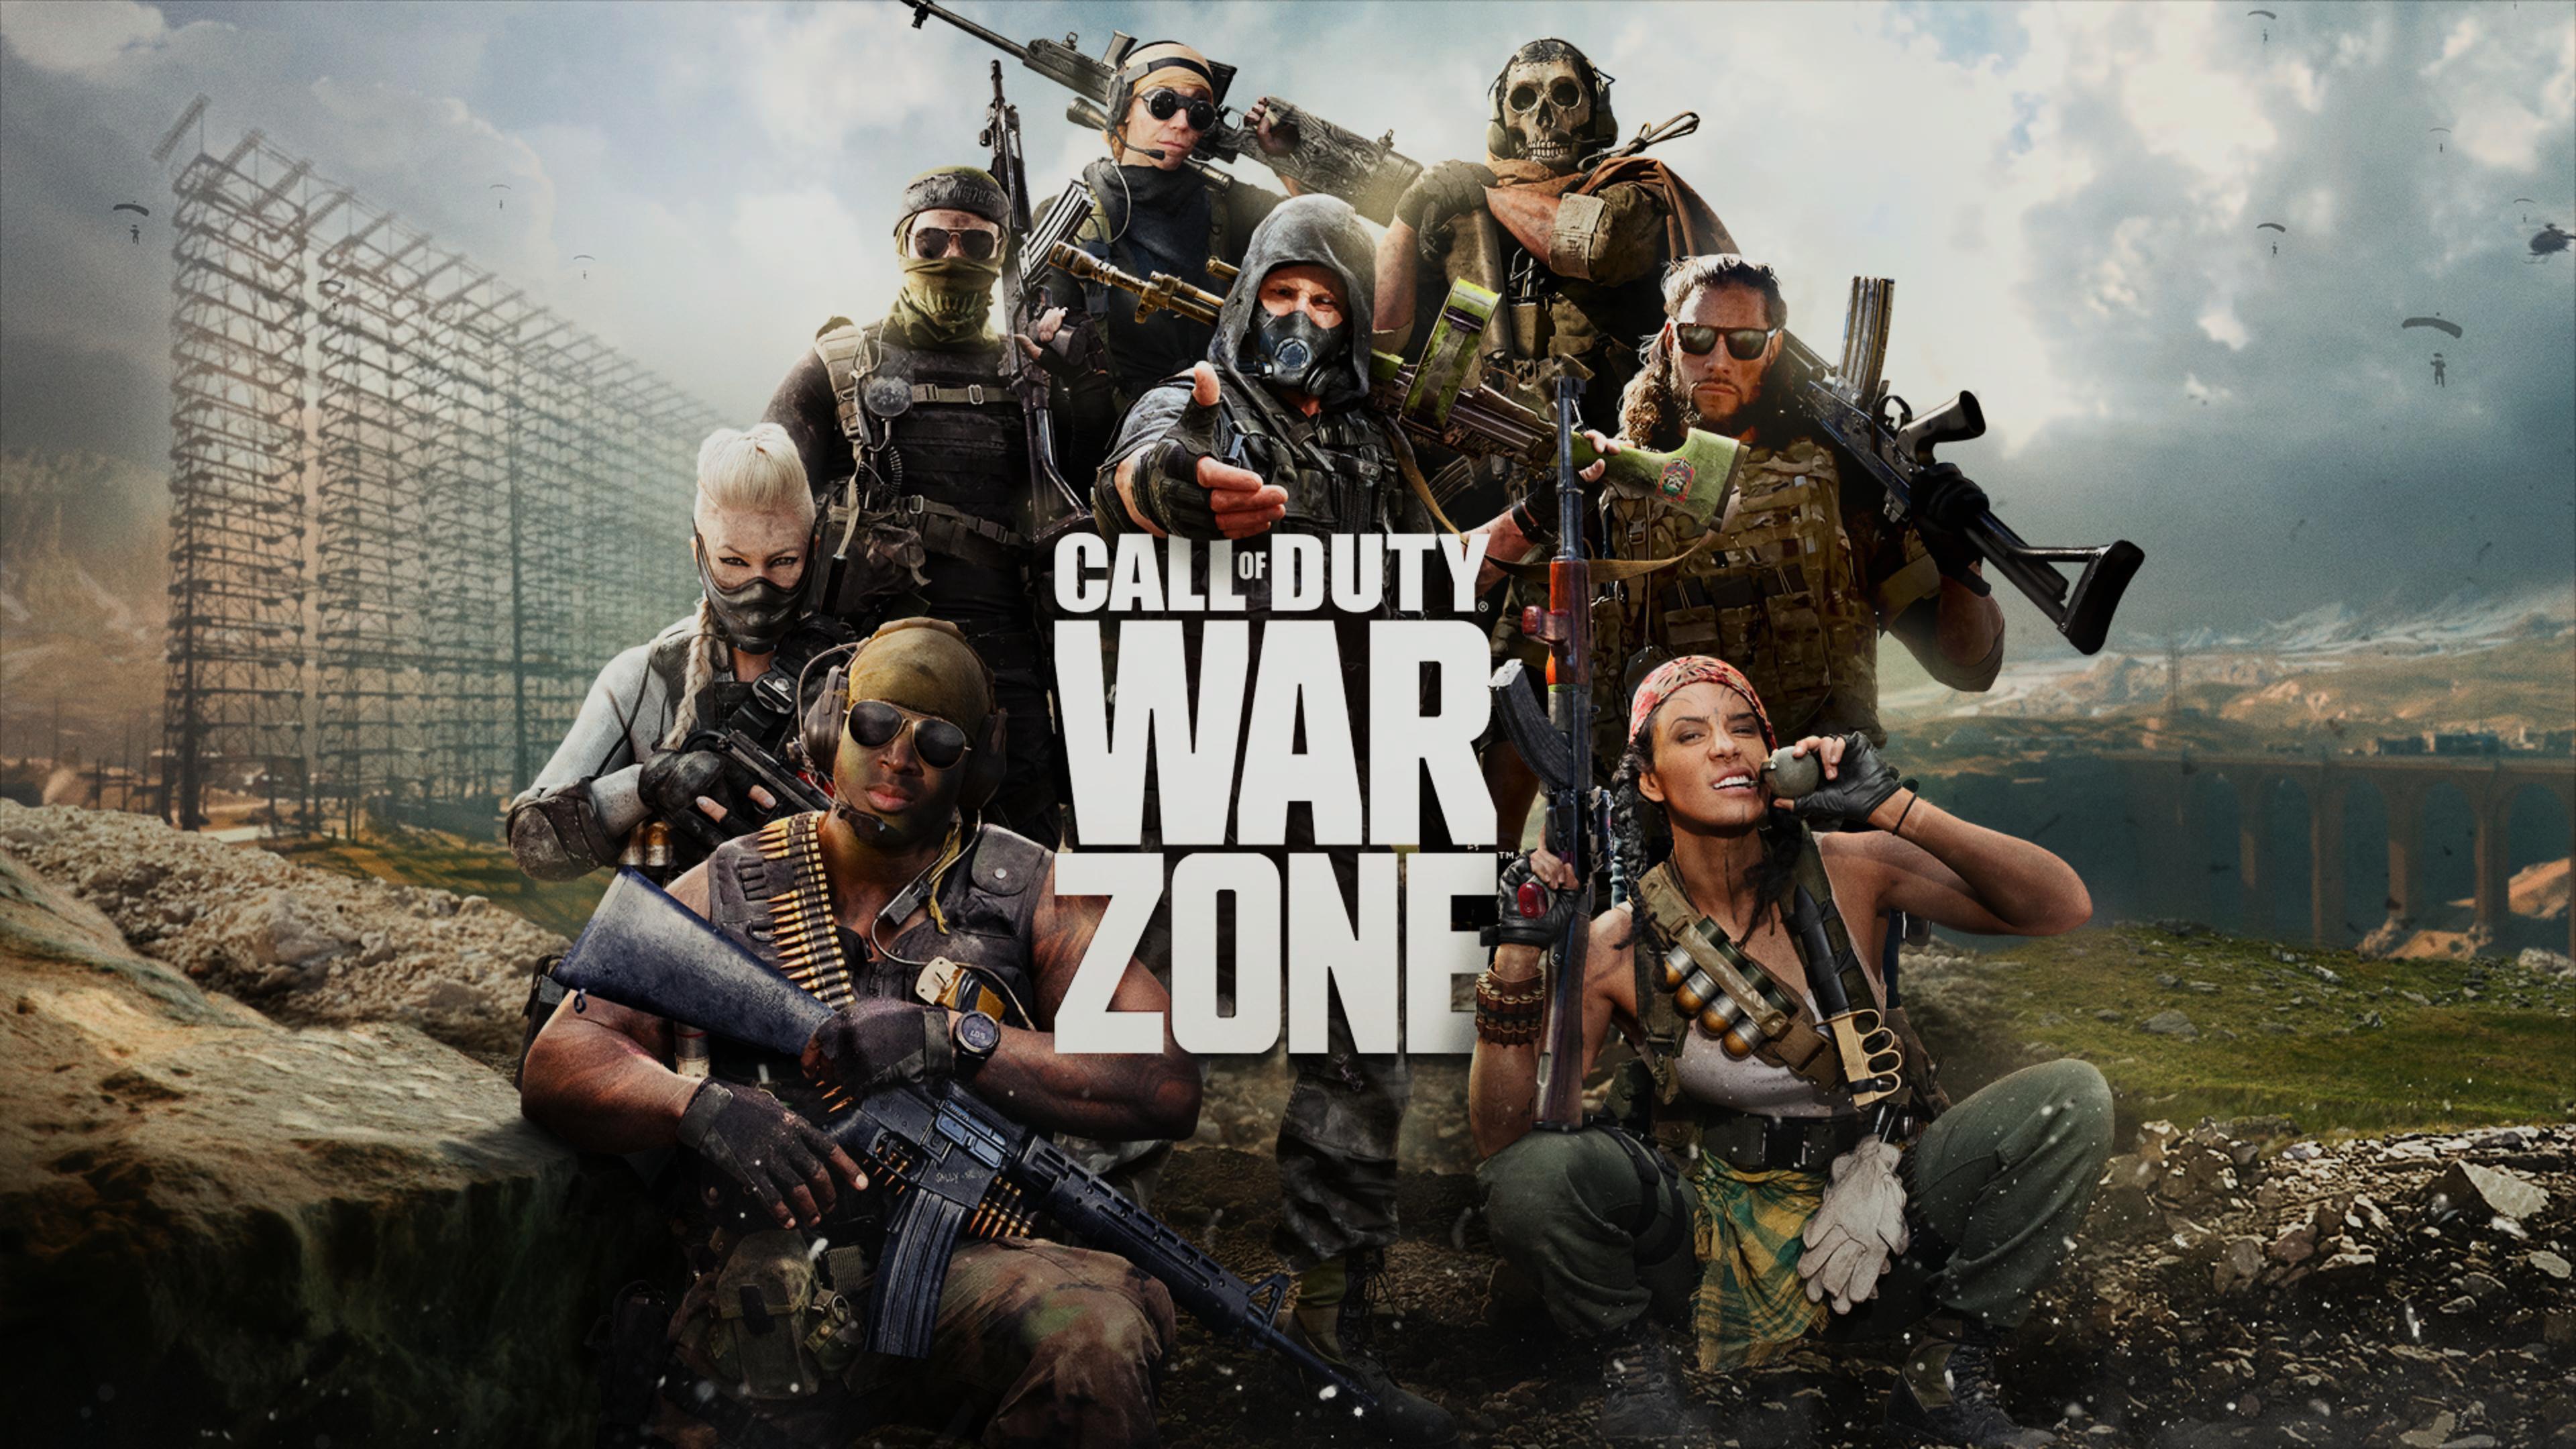 COD Warzone Mobile - Release date postponed to Nov 1, 2023! : r